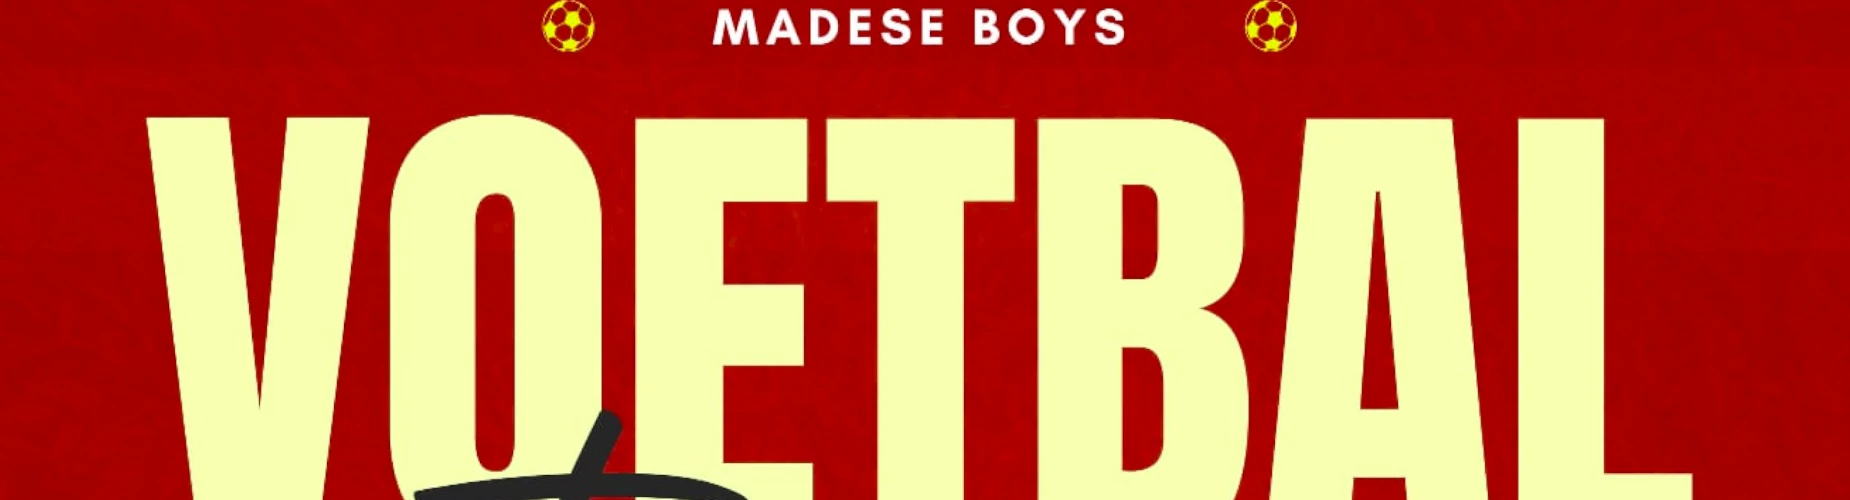 Banner - Madeseboys - Madese Boys - Made